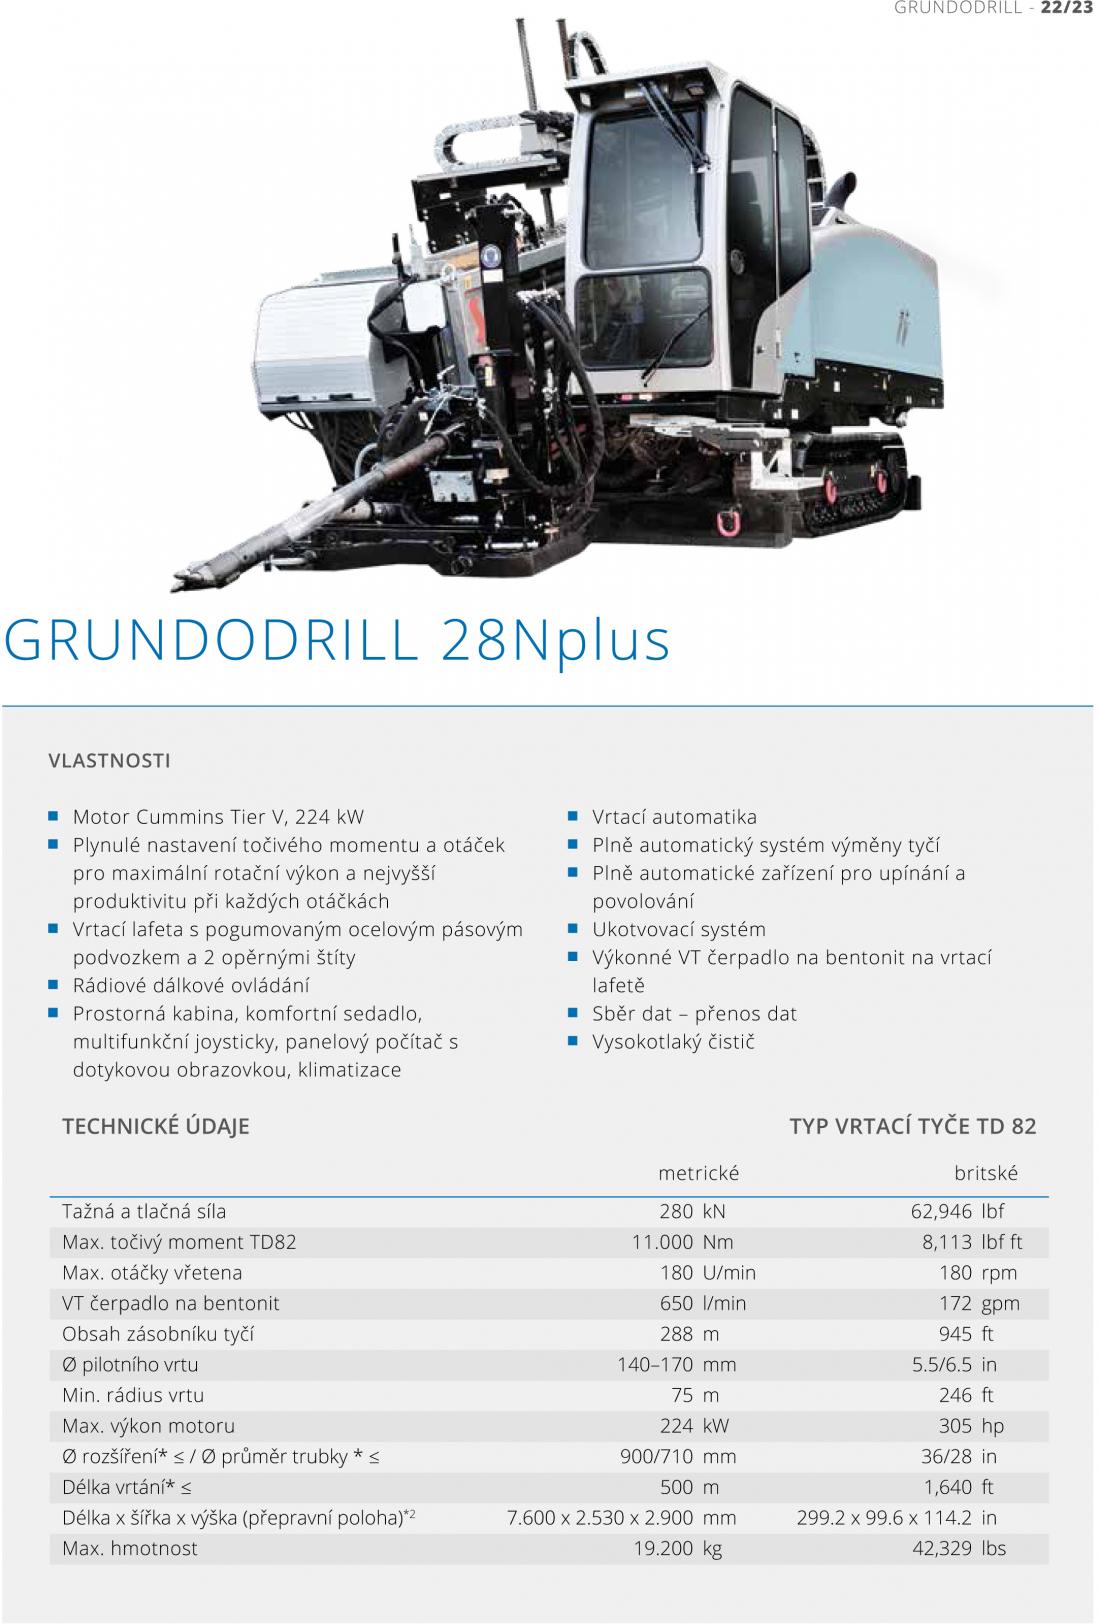 GRUNDODRILL 28Nplus